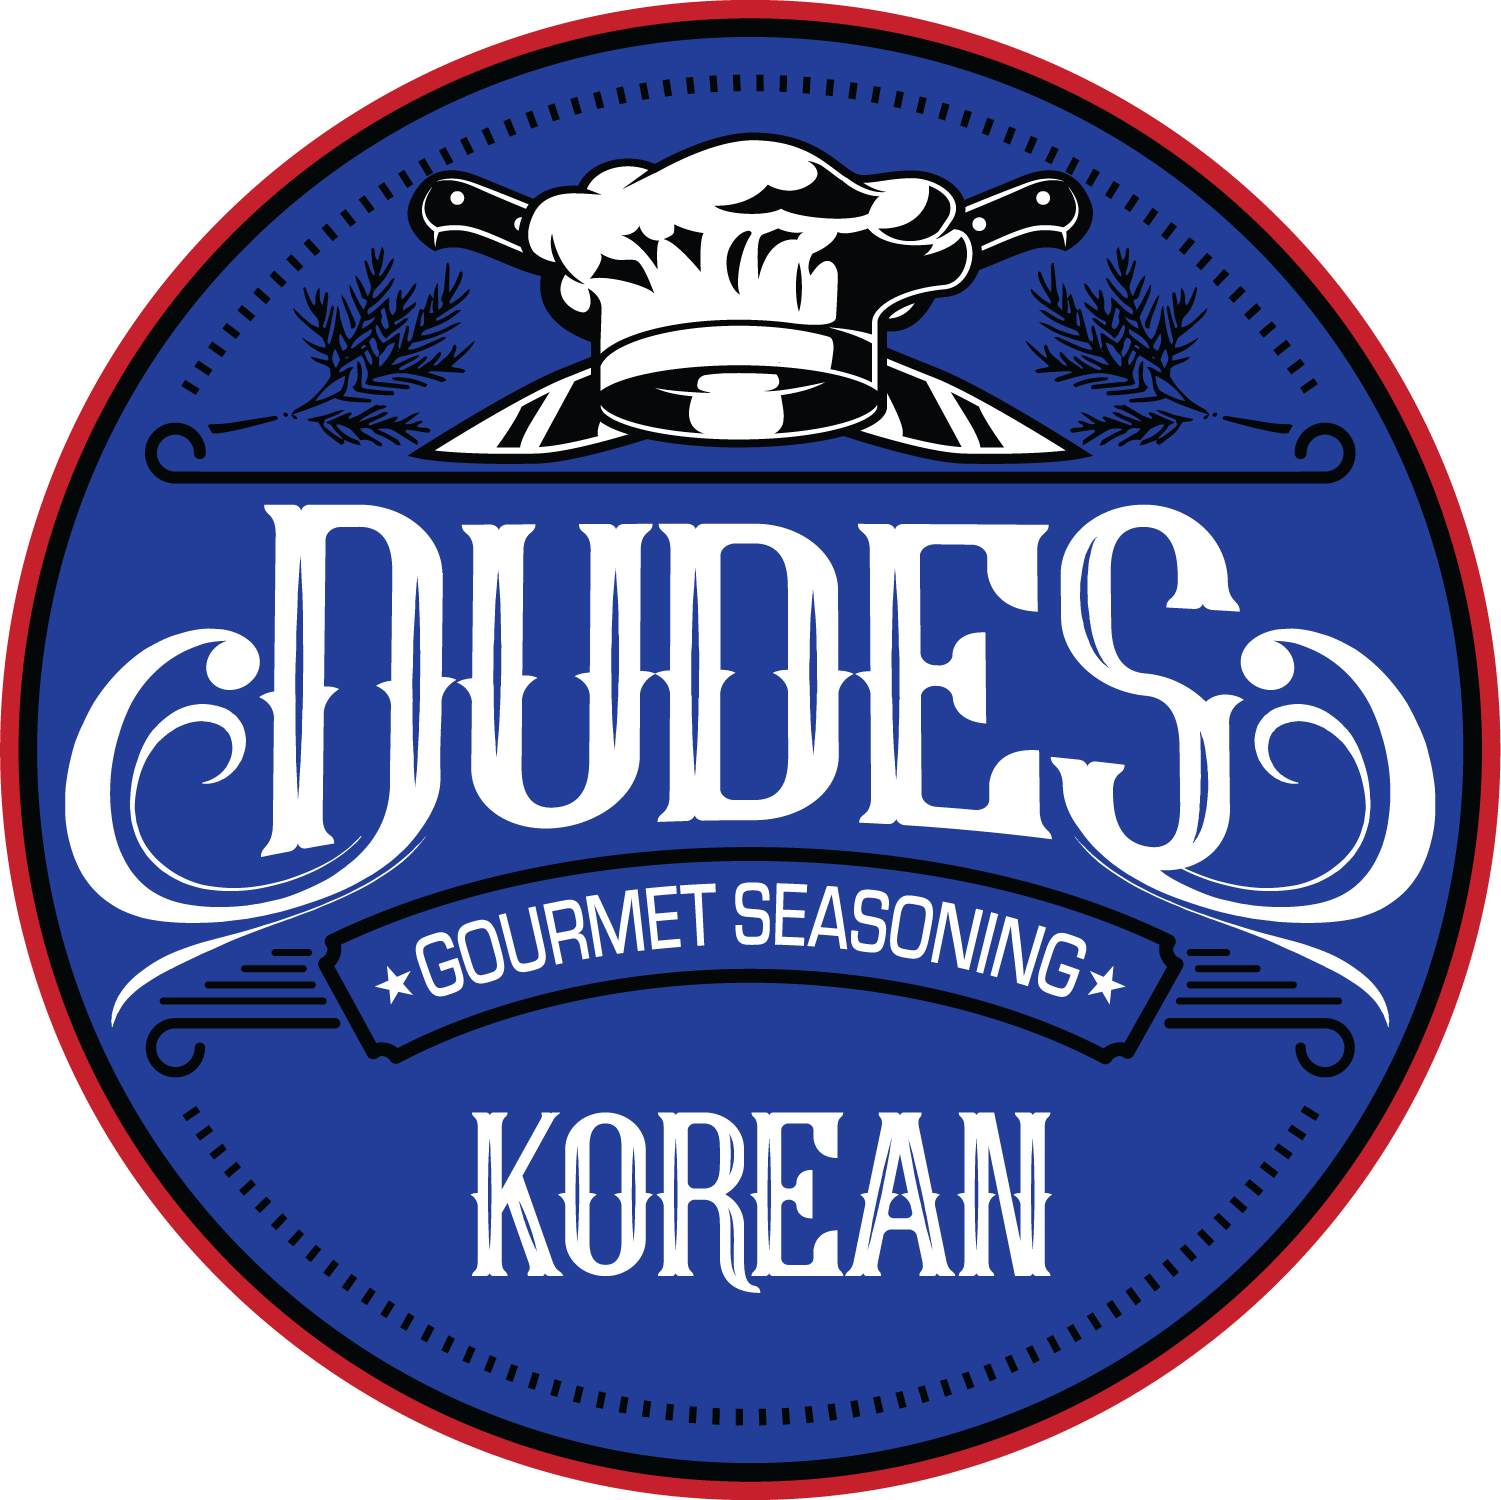 Korean Seasoning